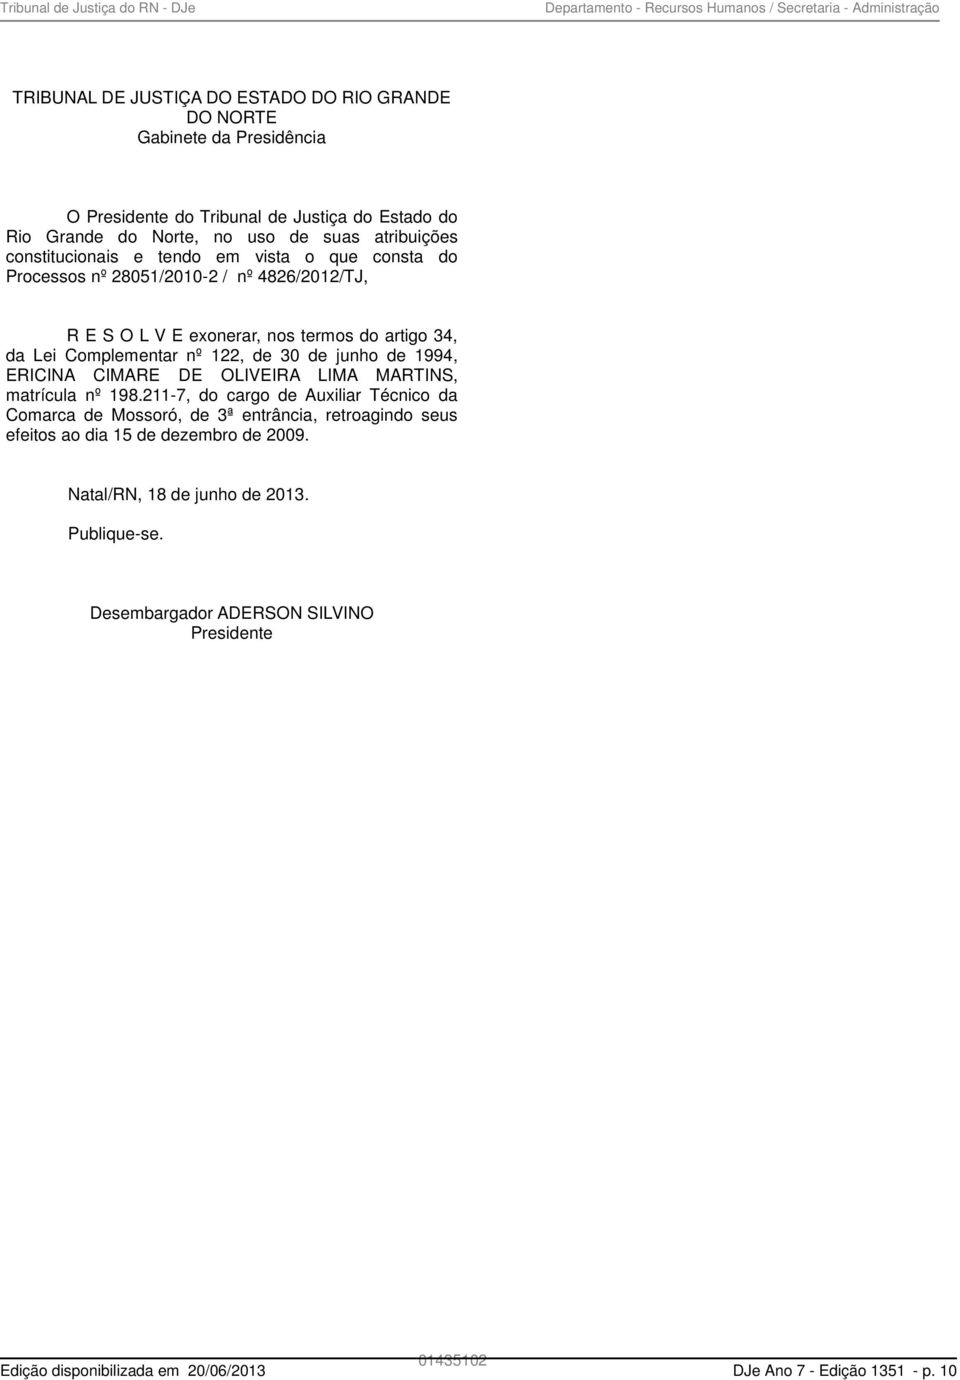 Complementar nº 122, de 30 de junho de 1994, ERICINA CIMARE DE OLIVEIRA LIMA MARTINS, matrícula nº 198.